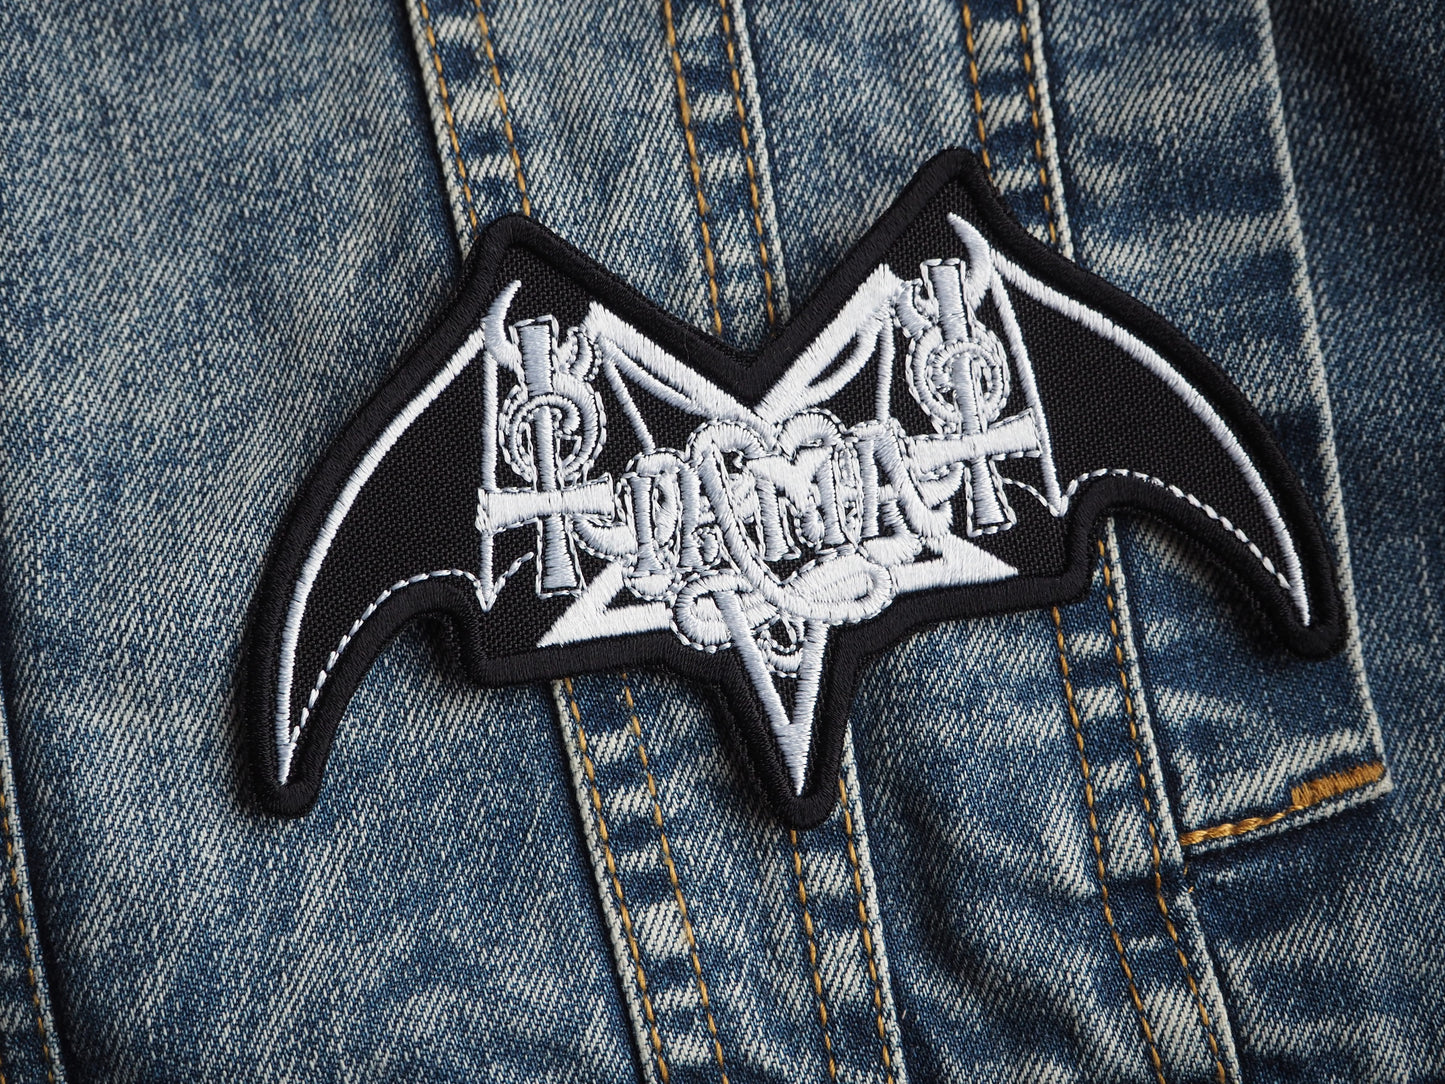 Tiamat Wings Pentagram Doom Metal Embroidered Patch